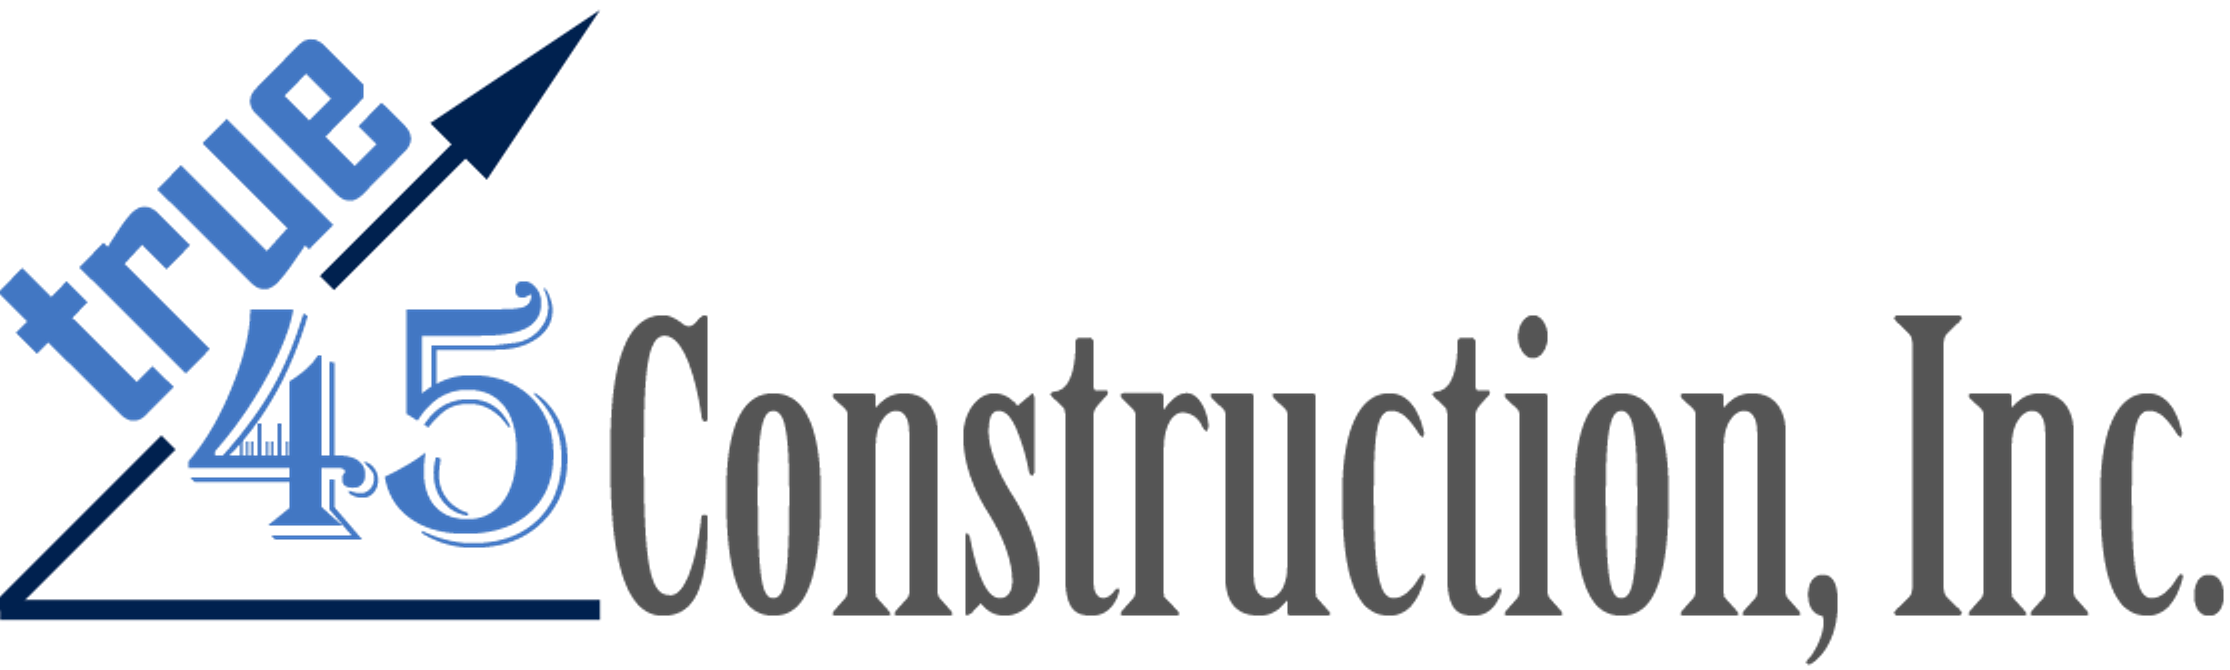 True 45 Construction, Inc. Logo